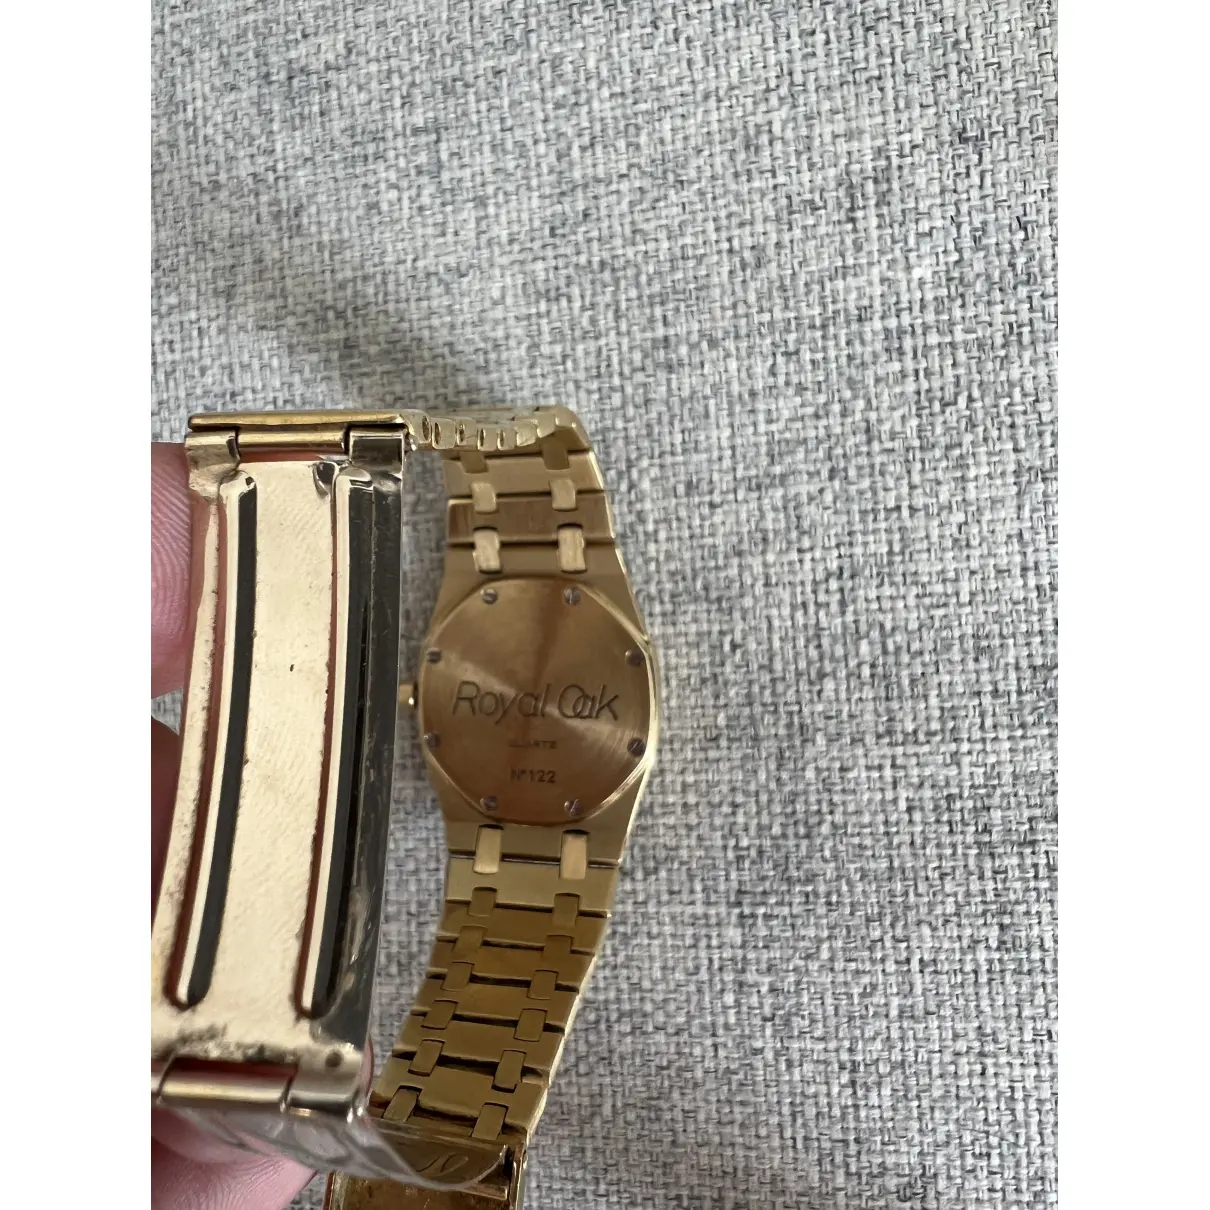 Buy Audemars Piguet Royal Oak Lady yellow gold watch online - Vintage